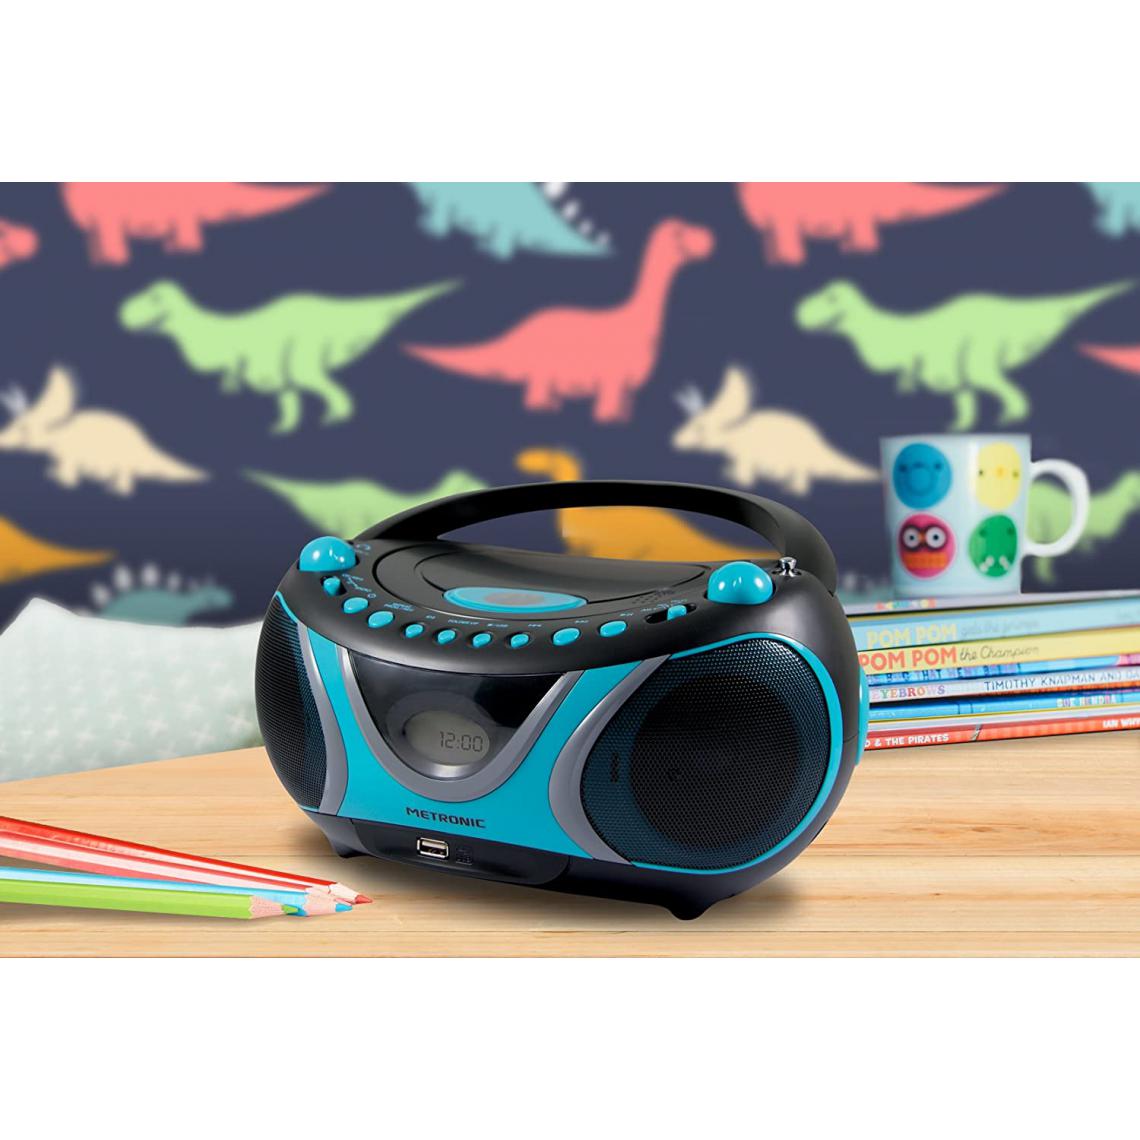 Metronic - mini chaine hifi Radio Lecteur CD MP3 USB Sportsman bleu noir - Radio, lecteur CD/MP3 enfant